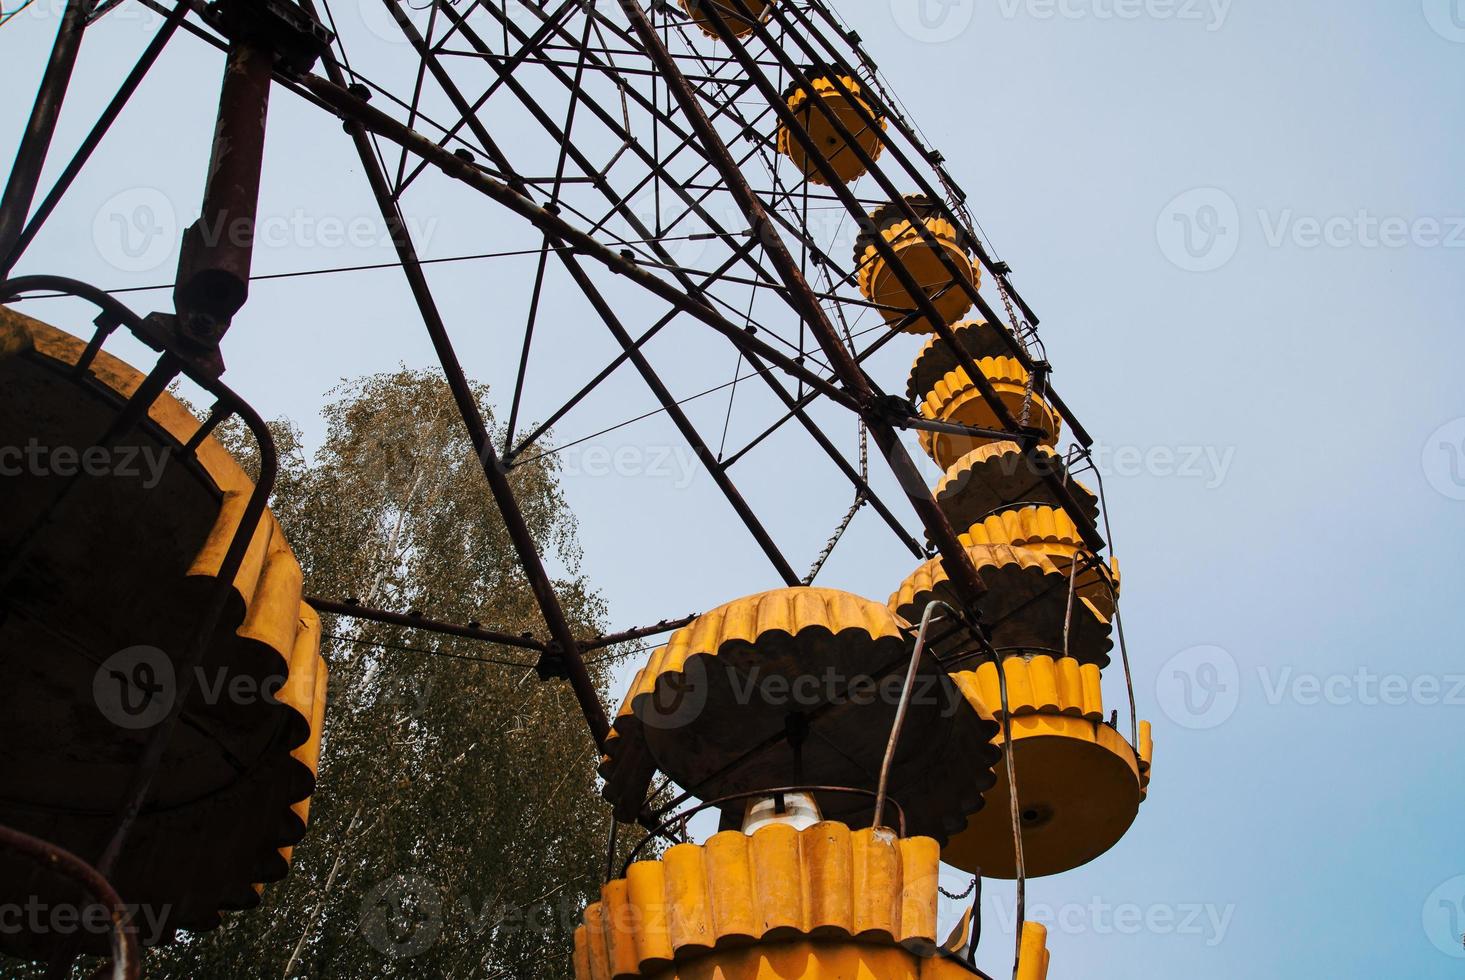 Abadonrd ferris wheel in Pripyat ghost town in Chernobyl exclusion zone, Ukraine photo